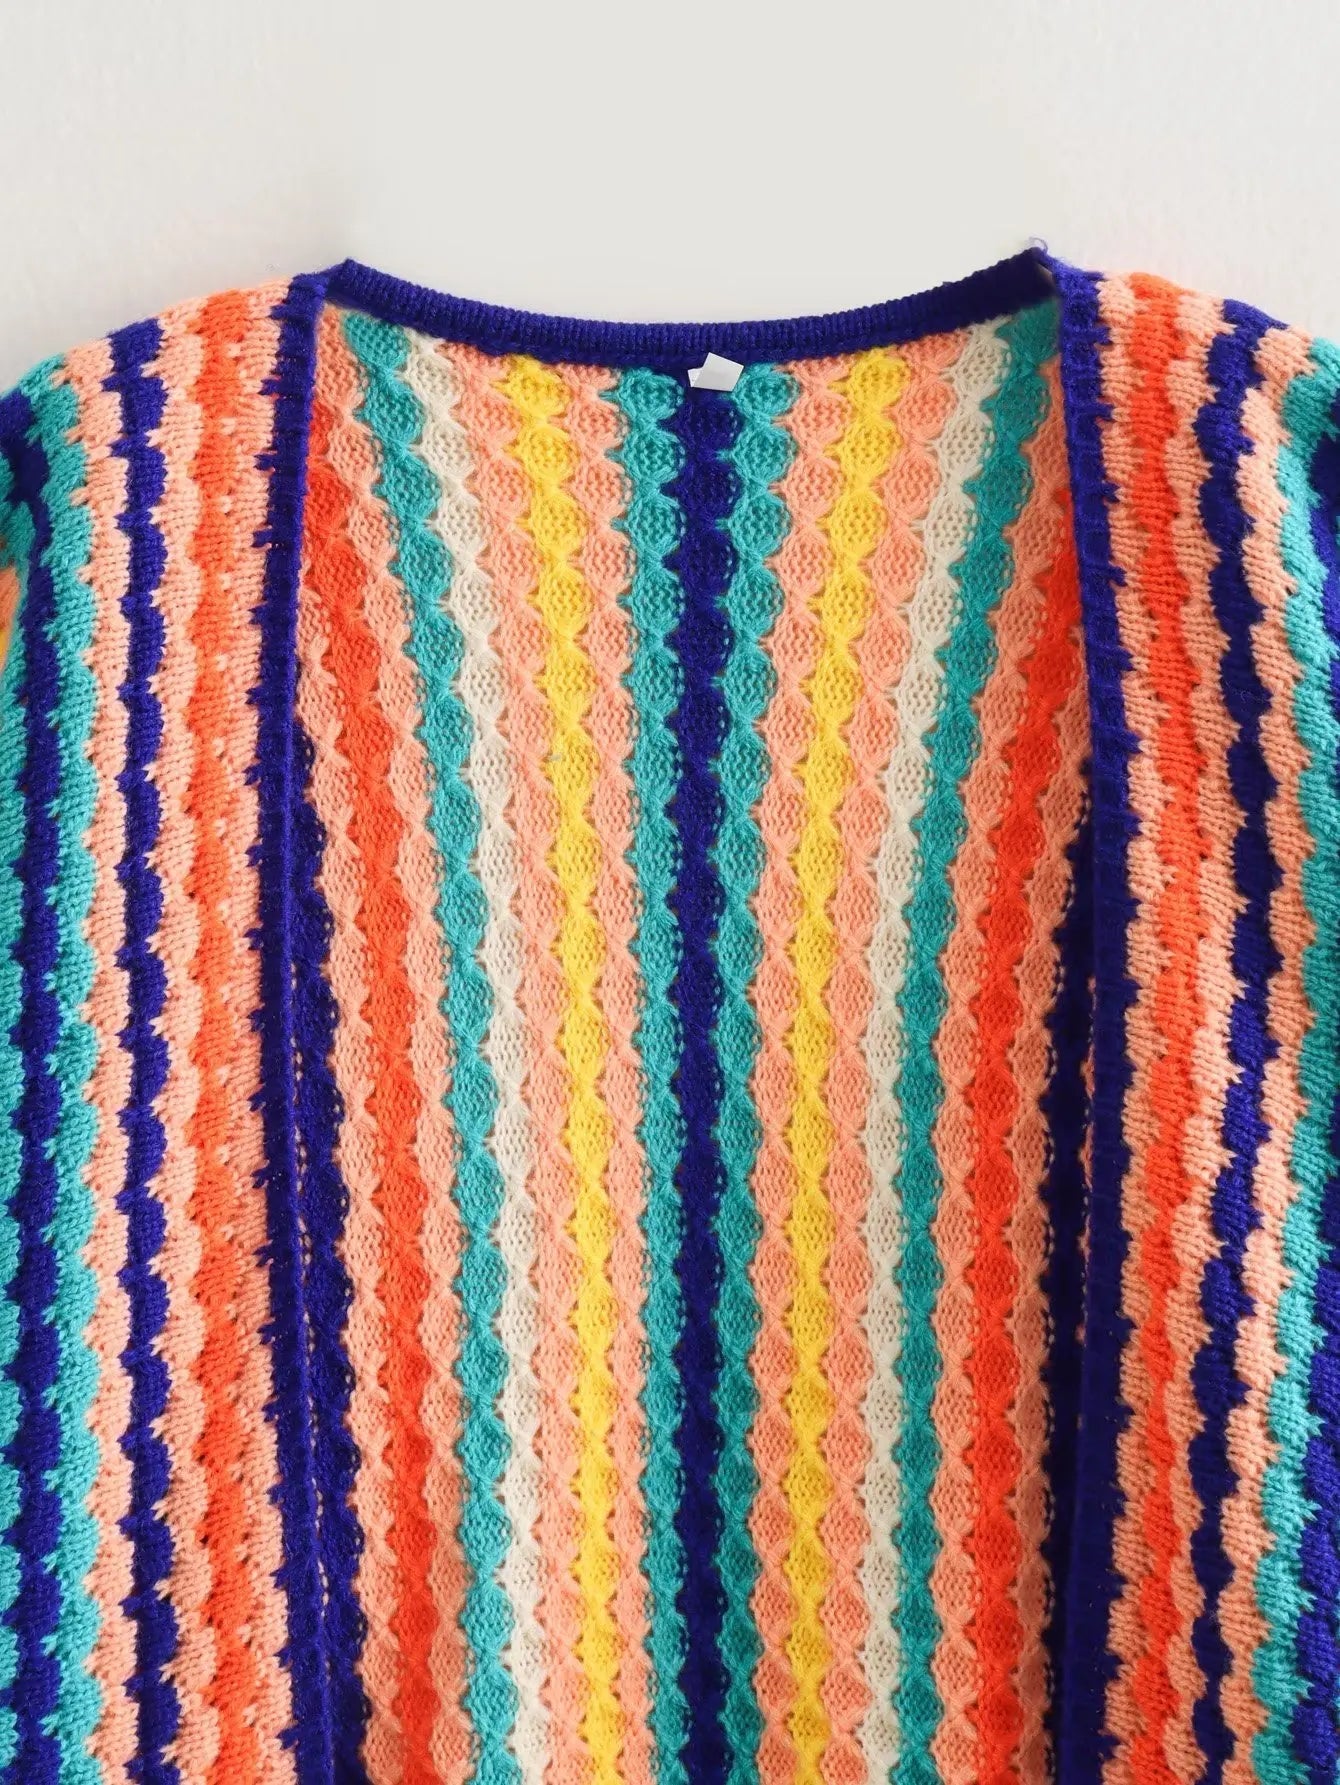 Rainbow Stripes Loose Knit Sweater - Kelly Obi New York